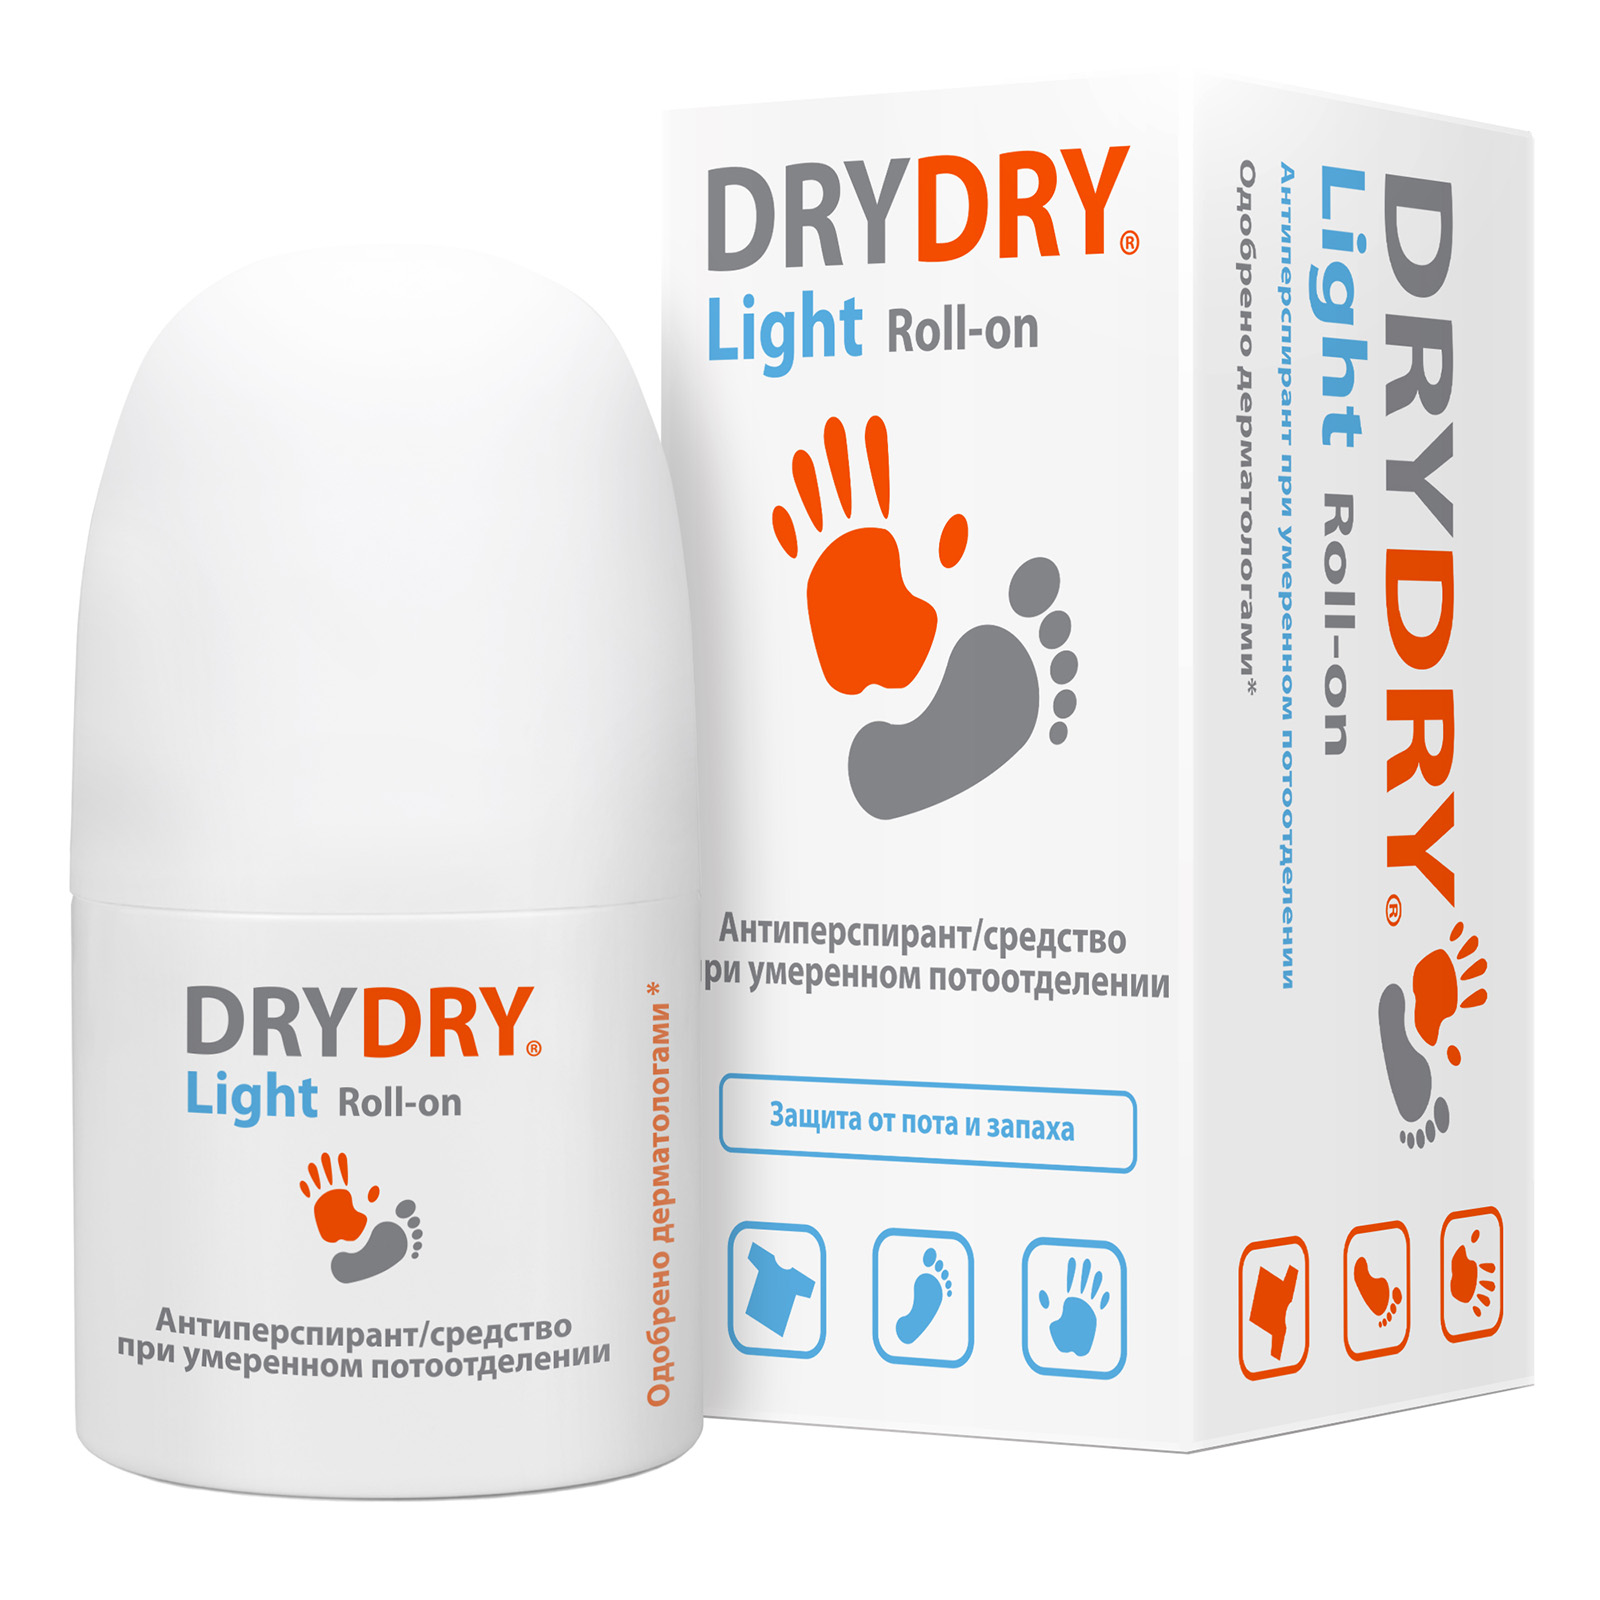 Dry Dry Средство от обильного потоотделения, 50 мл (Dry Dry, Light) dry dry средство от обильного потоотделения длительного действия classic 35 мл dry dry